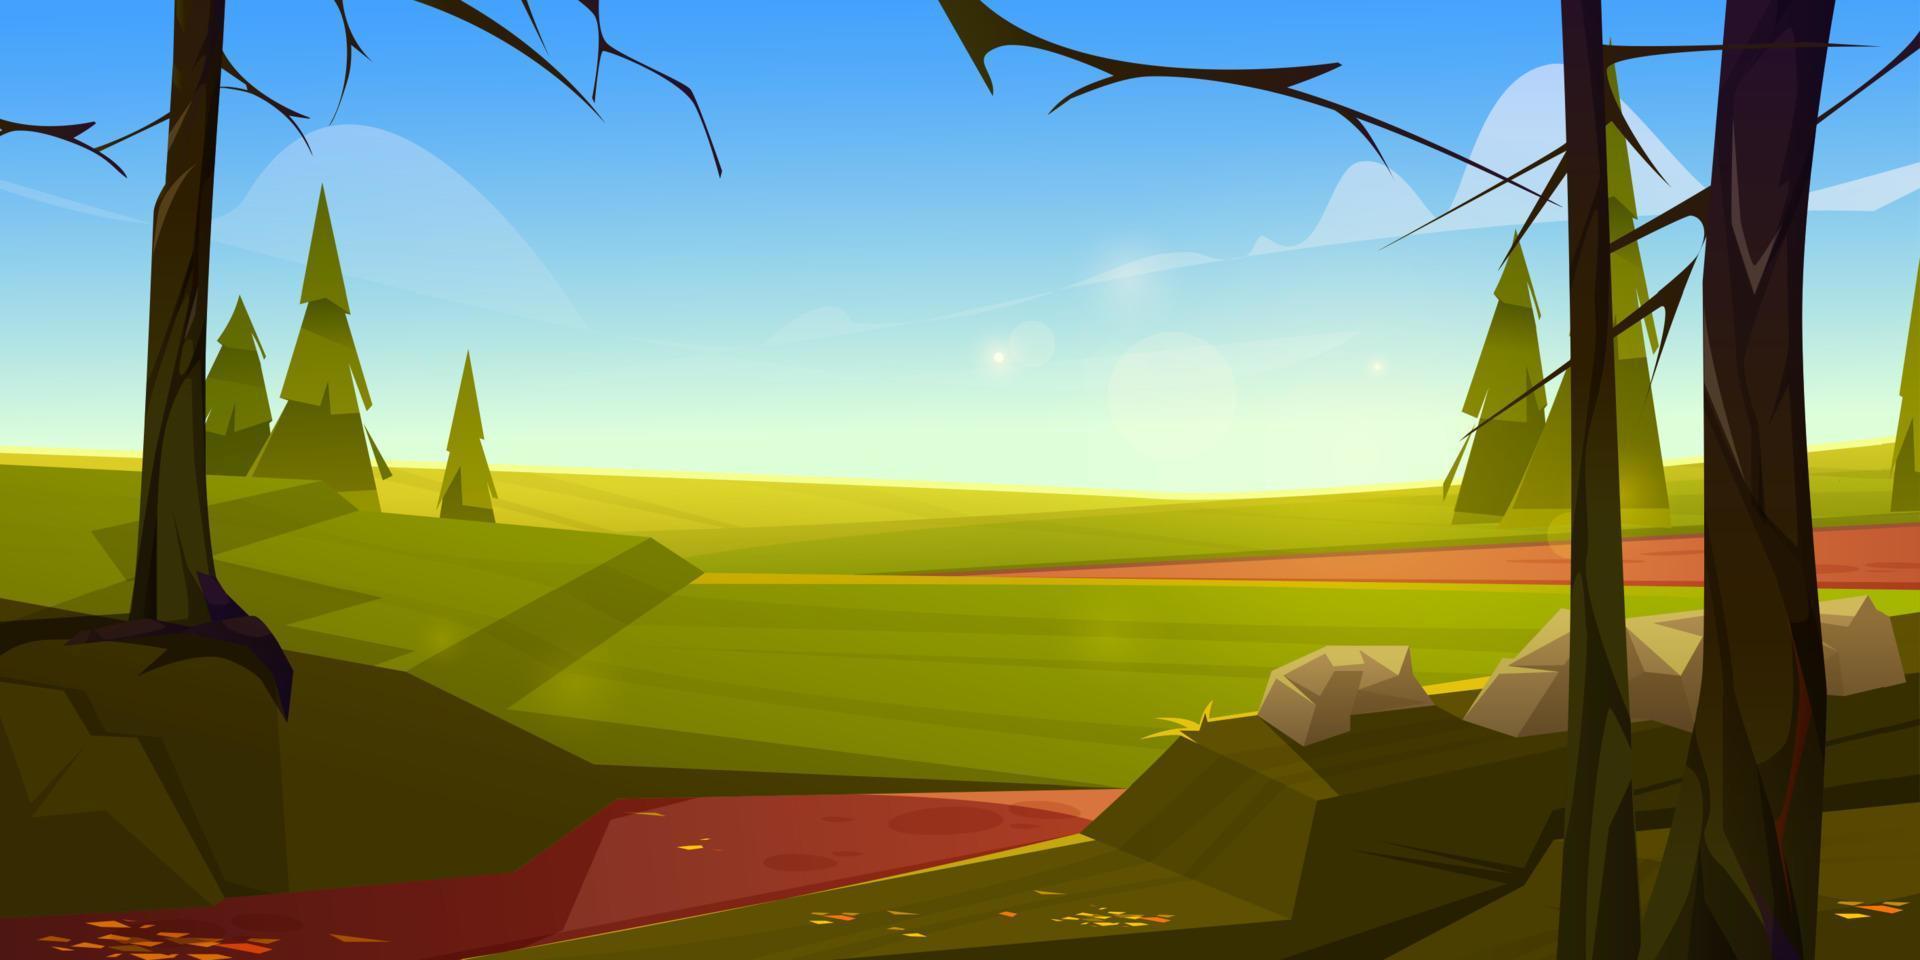 Cartoon nature landscape, rural scenery background vector